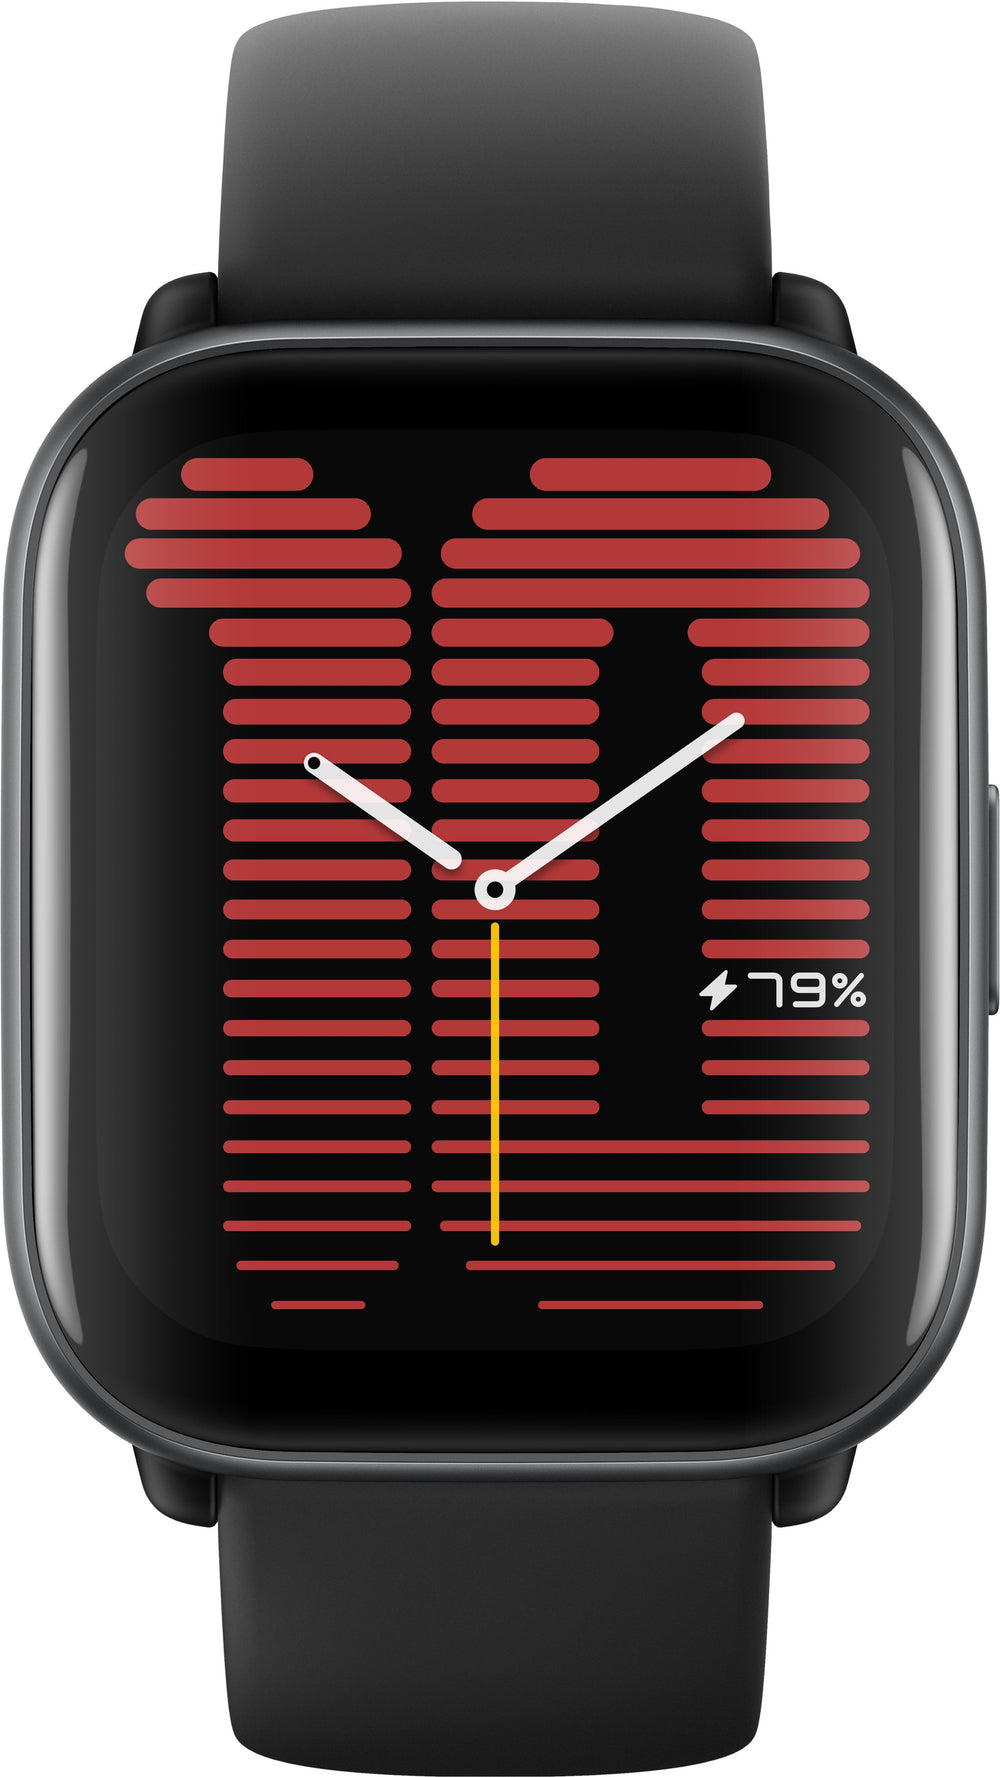 Amazfit - Active Smartwatch - Black_1